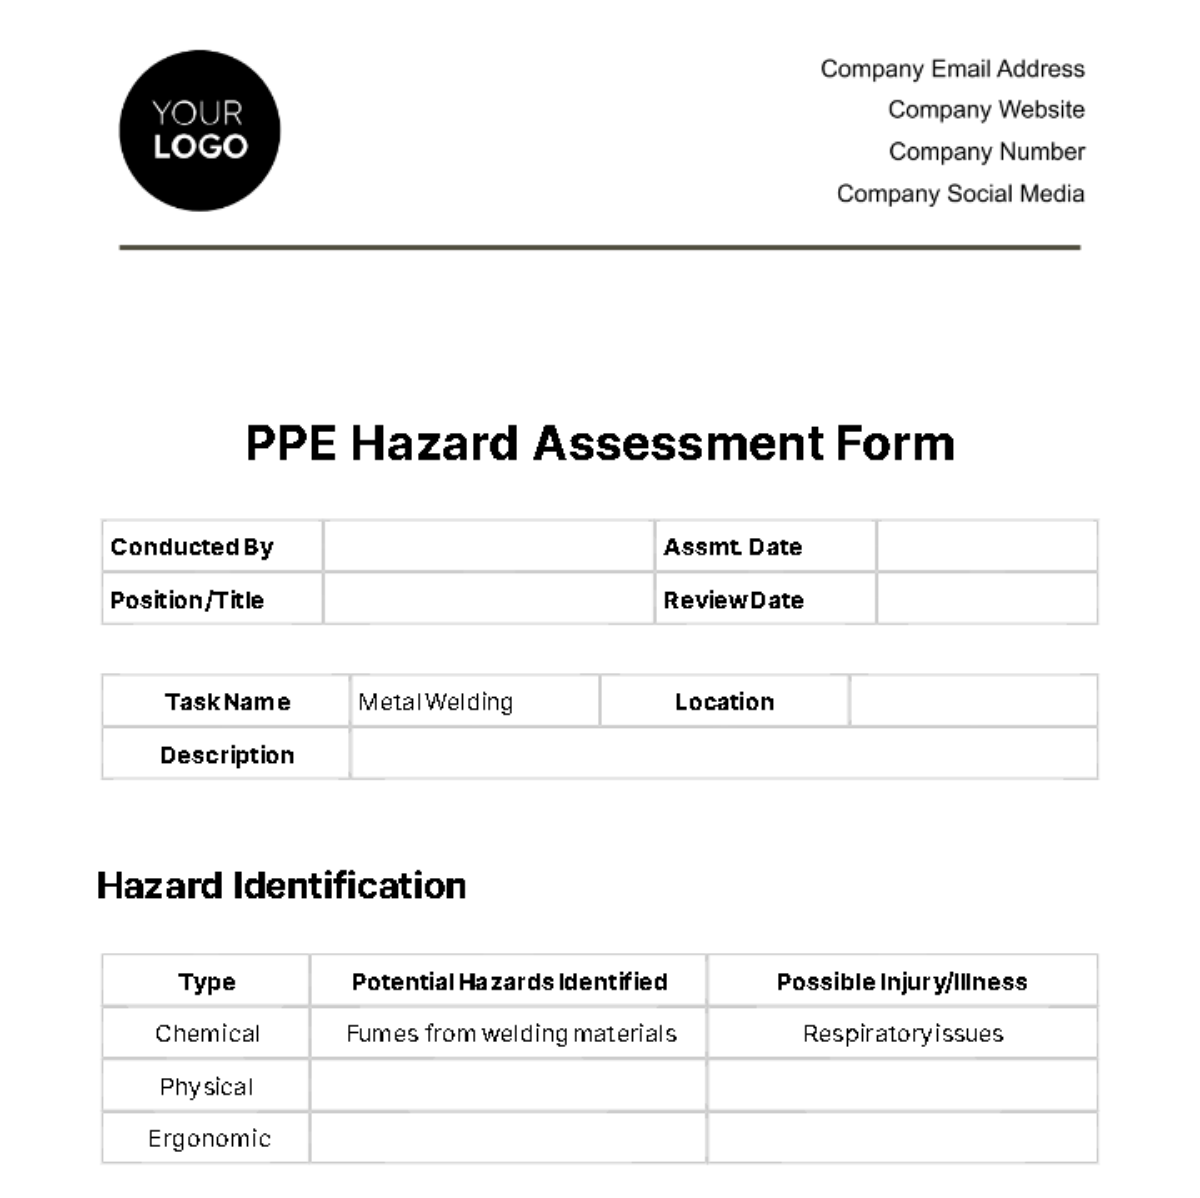 PPE Hazard Assessment Form Template